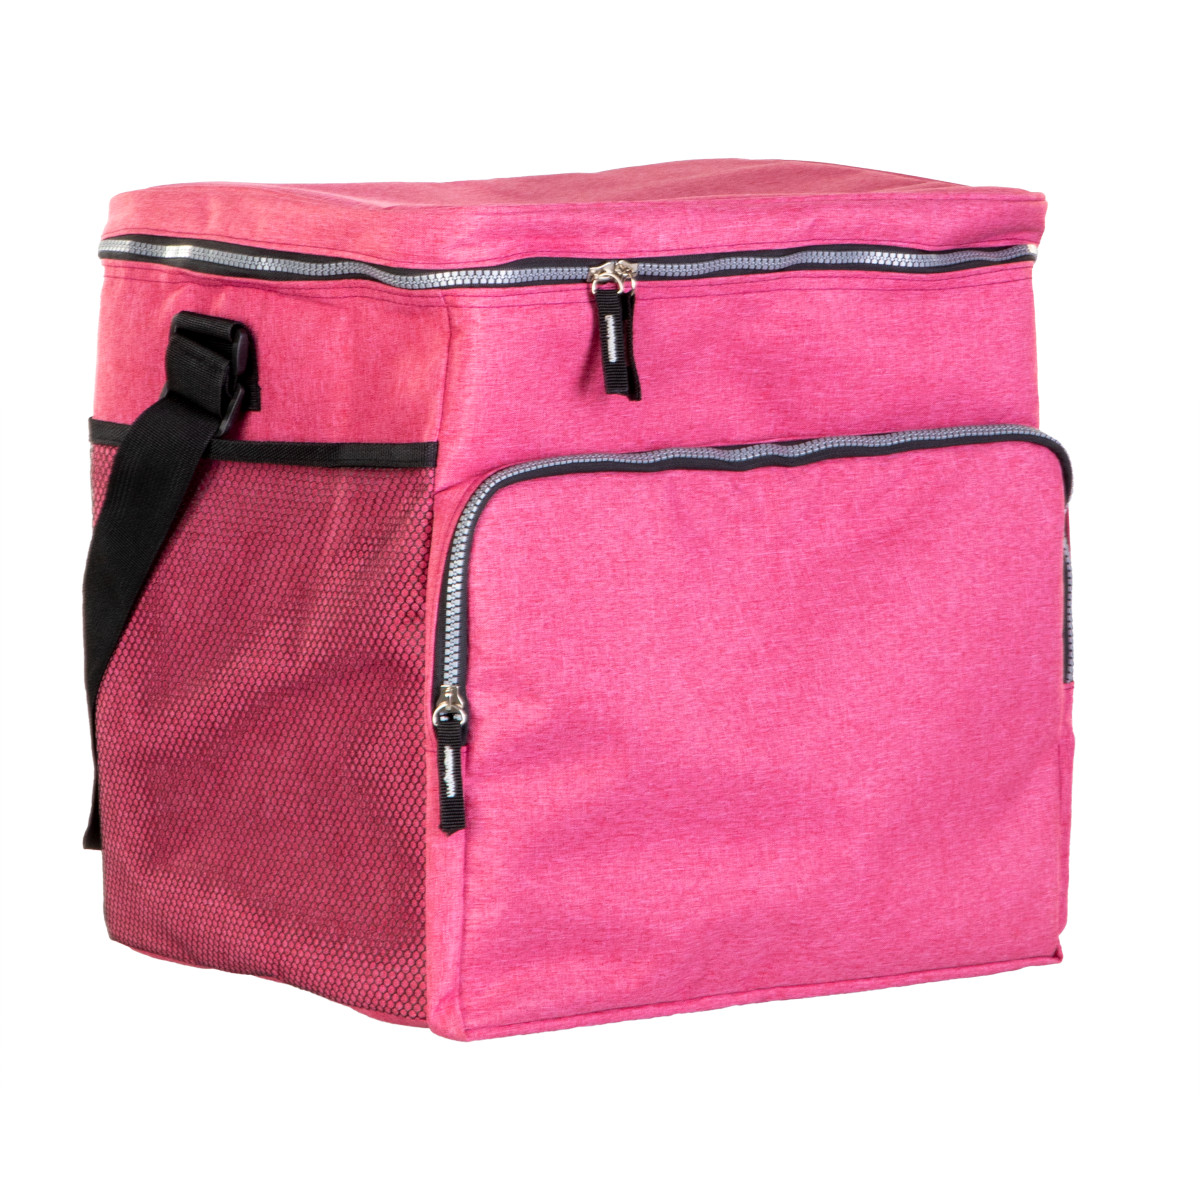 Kühltasche - pink - aus Textil - ca. 38 x 30 x 38 cm - 42 l